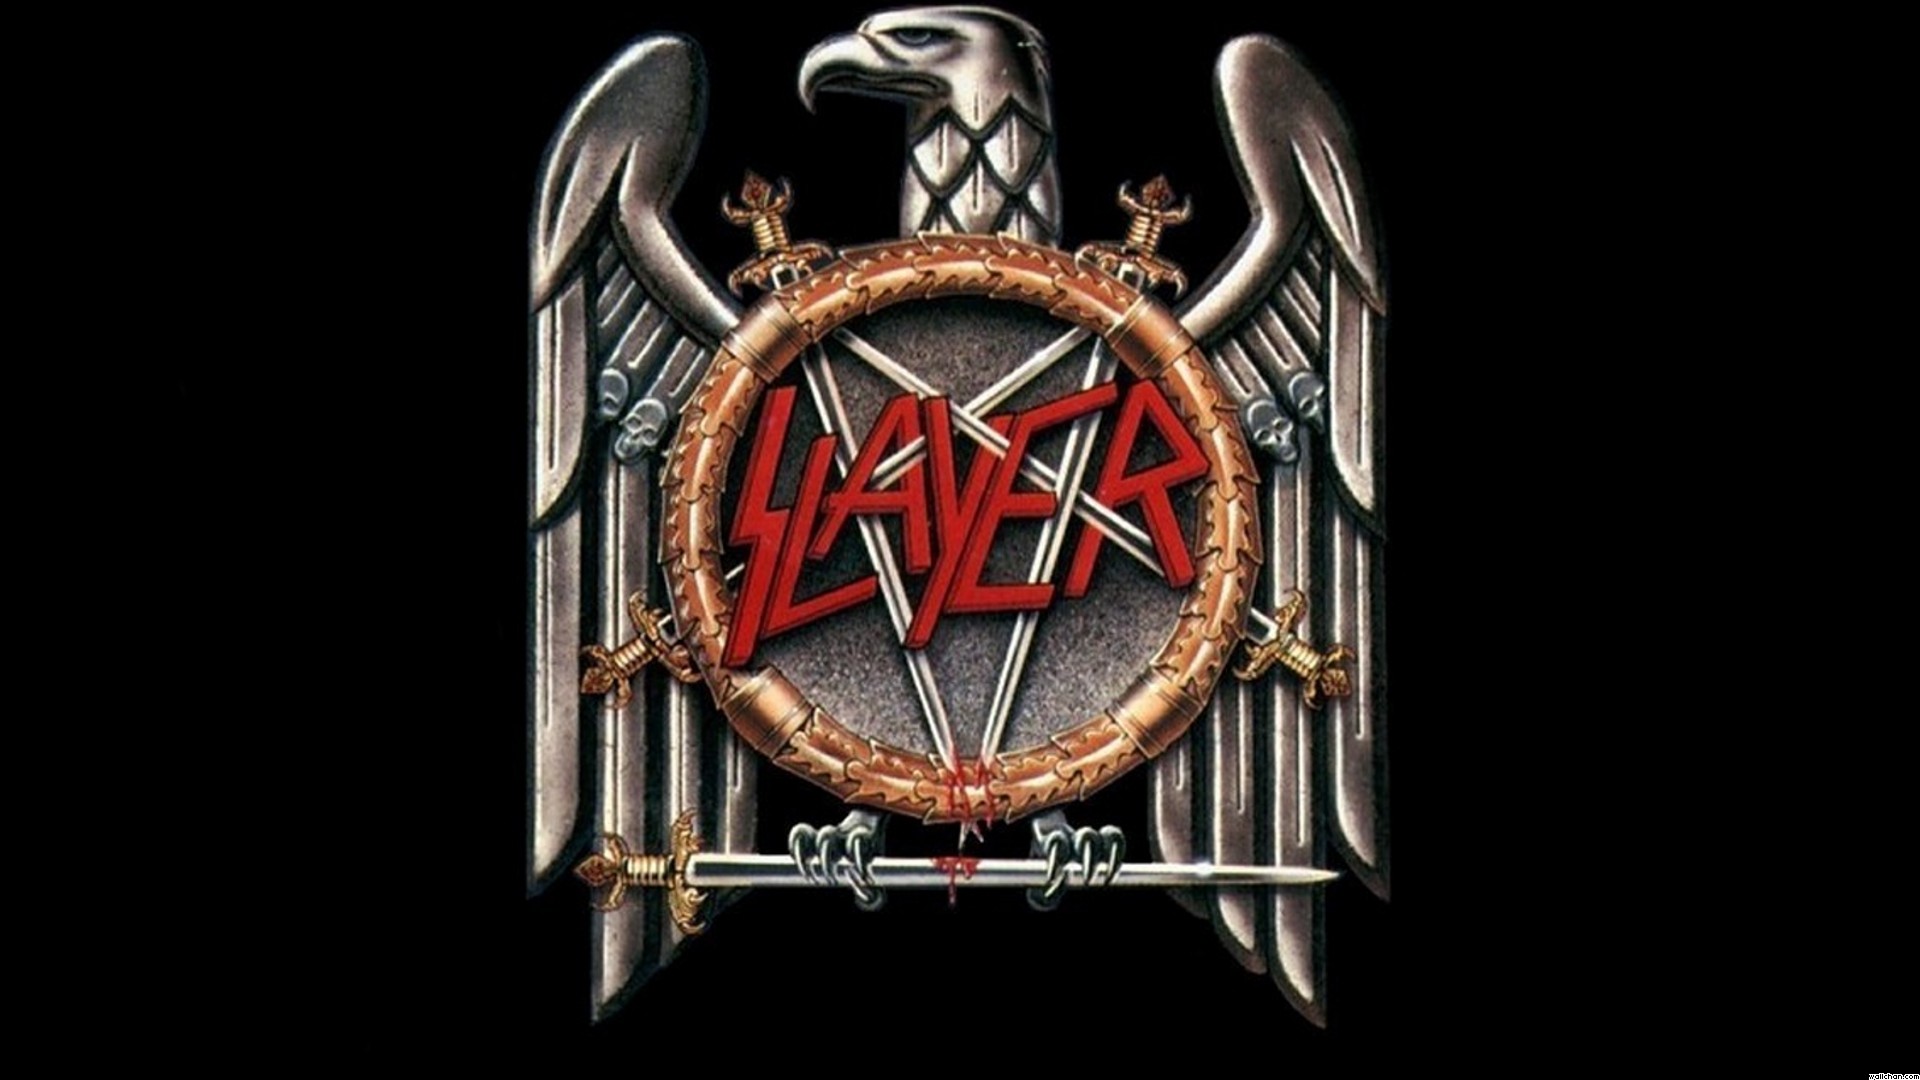 1920x1080 Slayer groups bands music heavy metal death hard rock album covers wallpaper  |  | 25192 | WallpaperUP